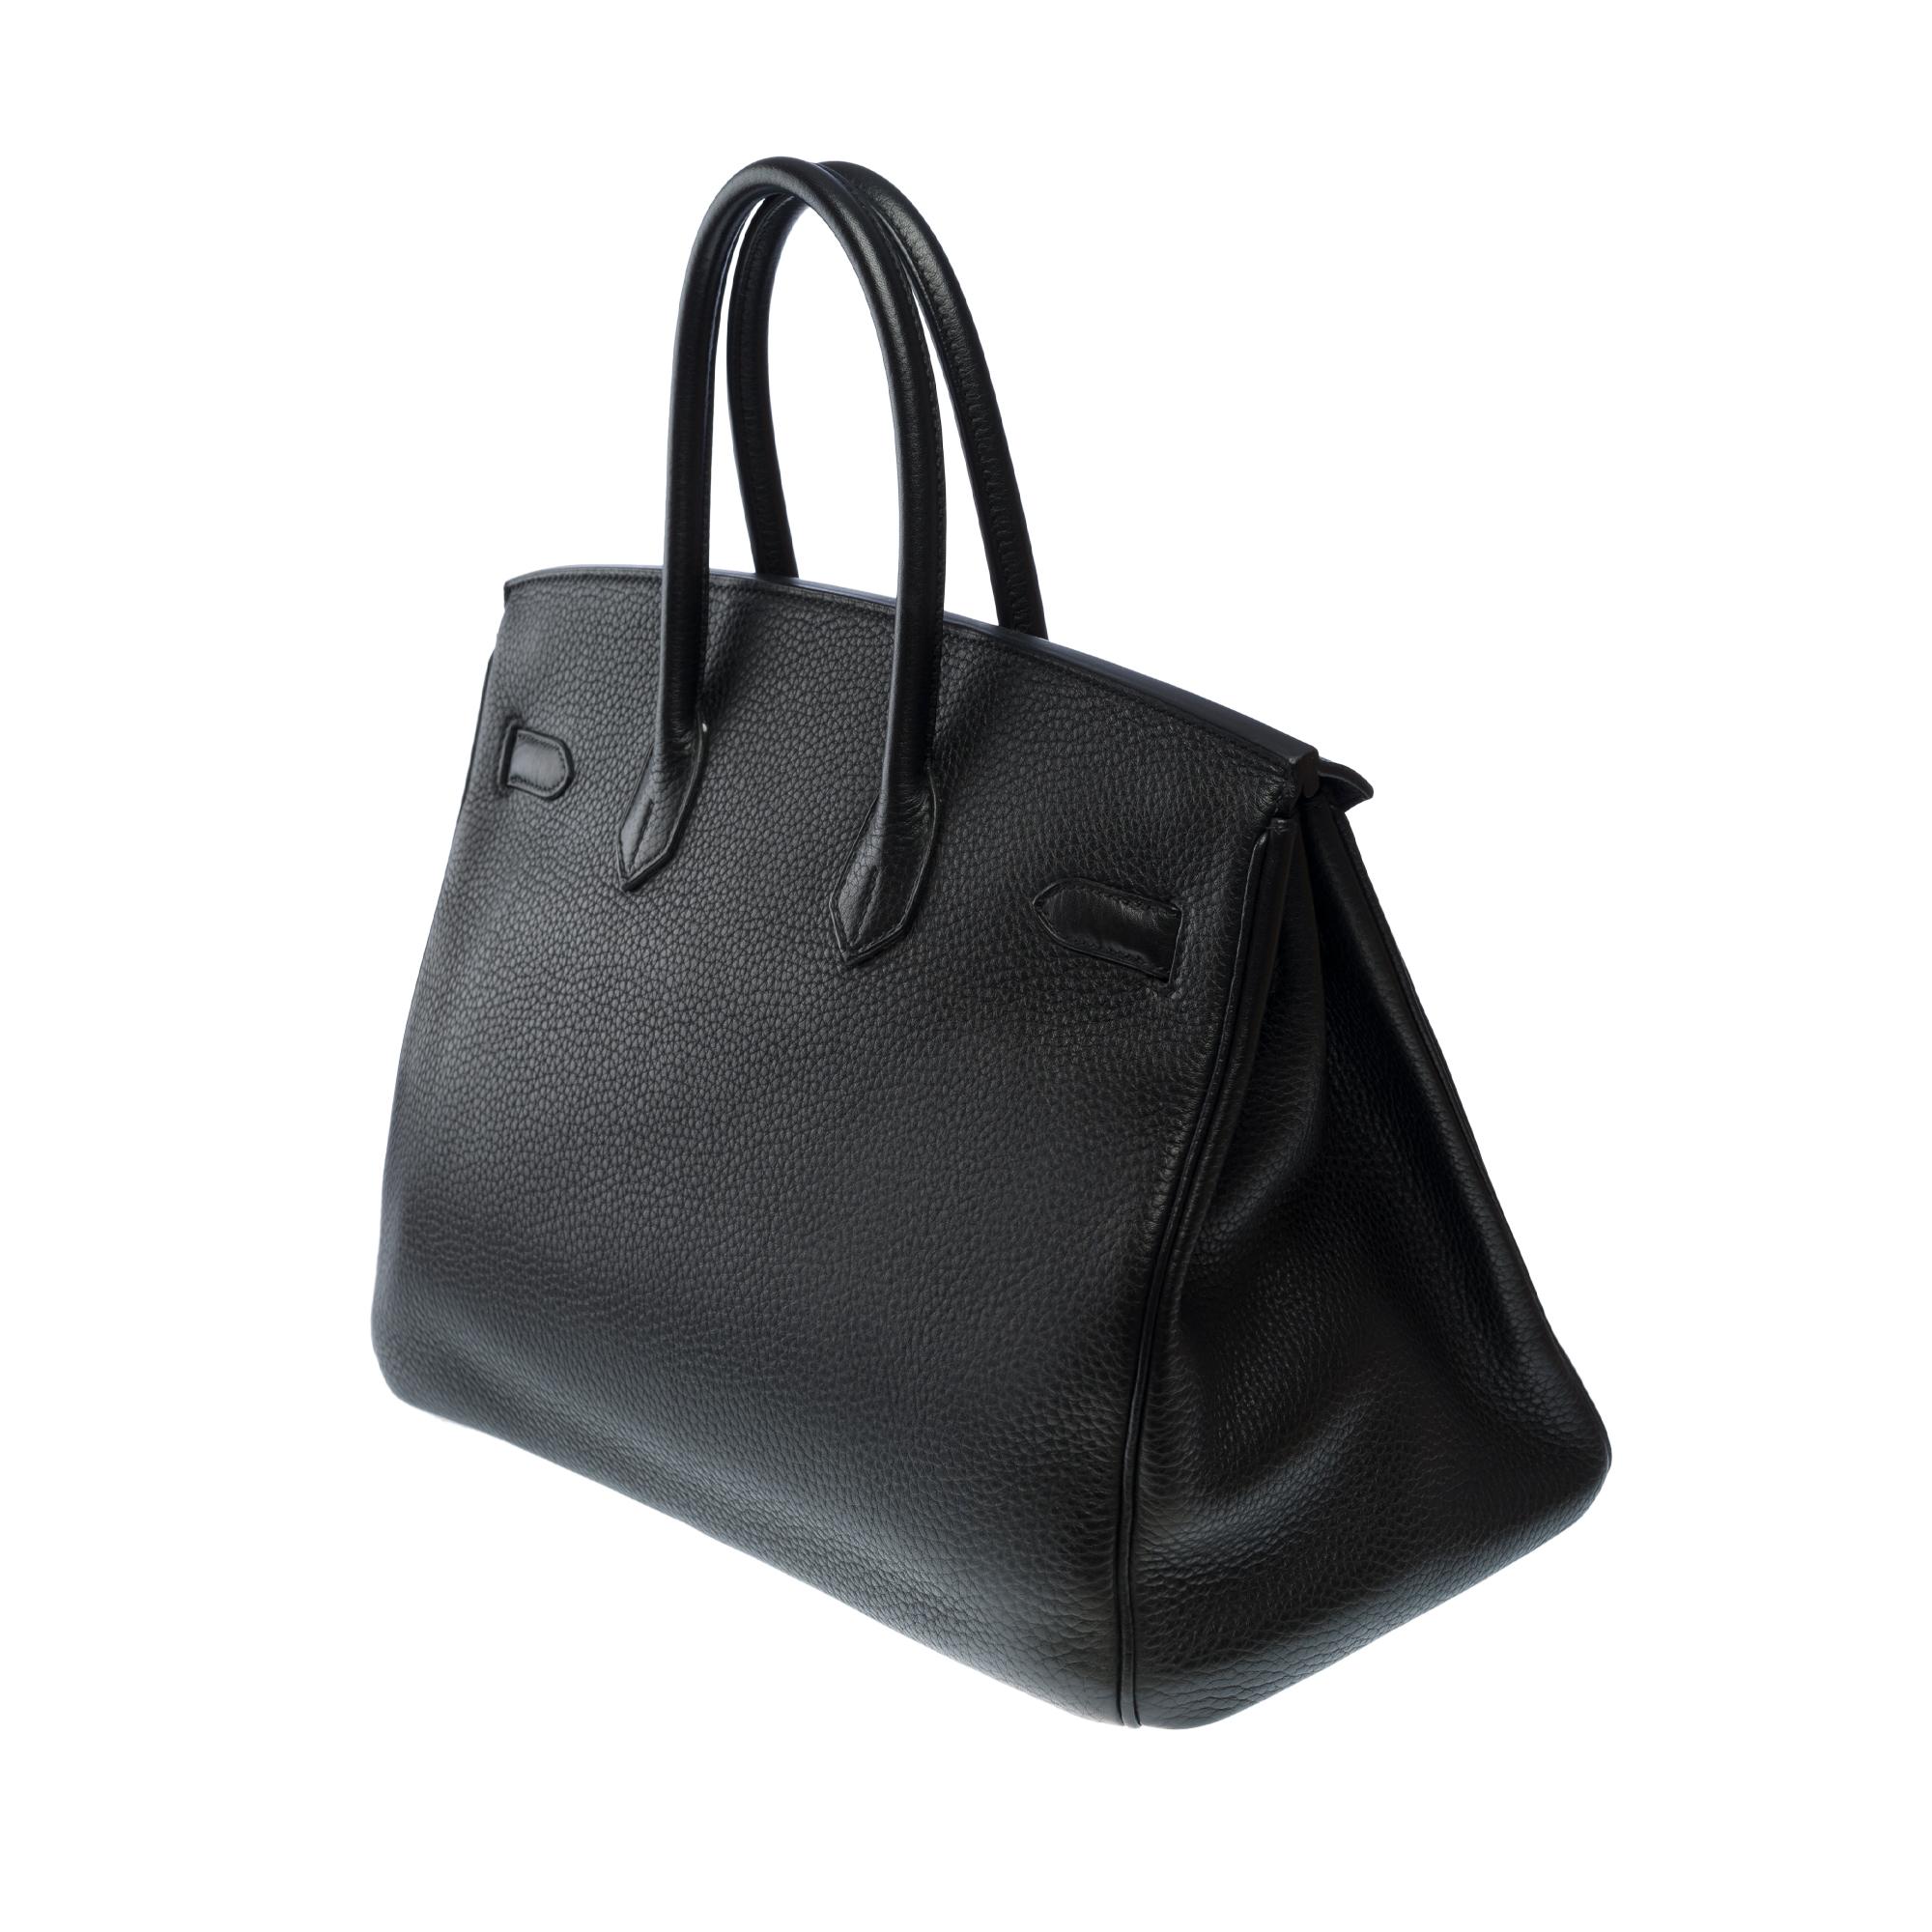 Amazing Hermès Birkin 35 handbag in black Togo leather, SHW 1